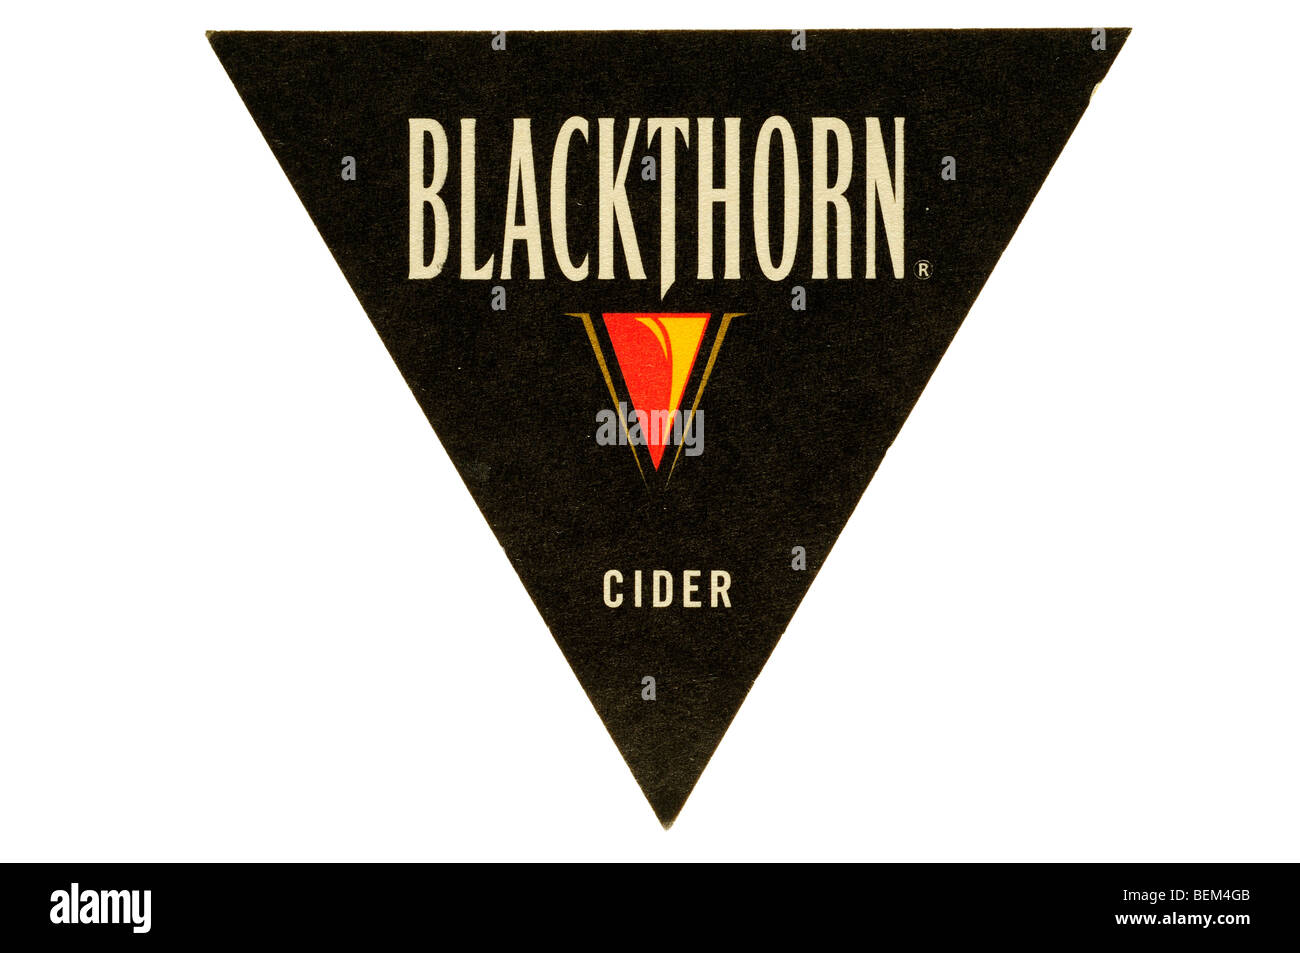 blackthorn cider Stock Photo